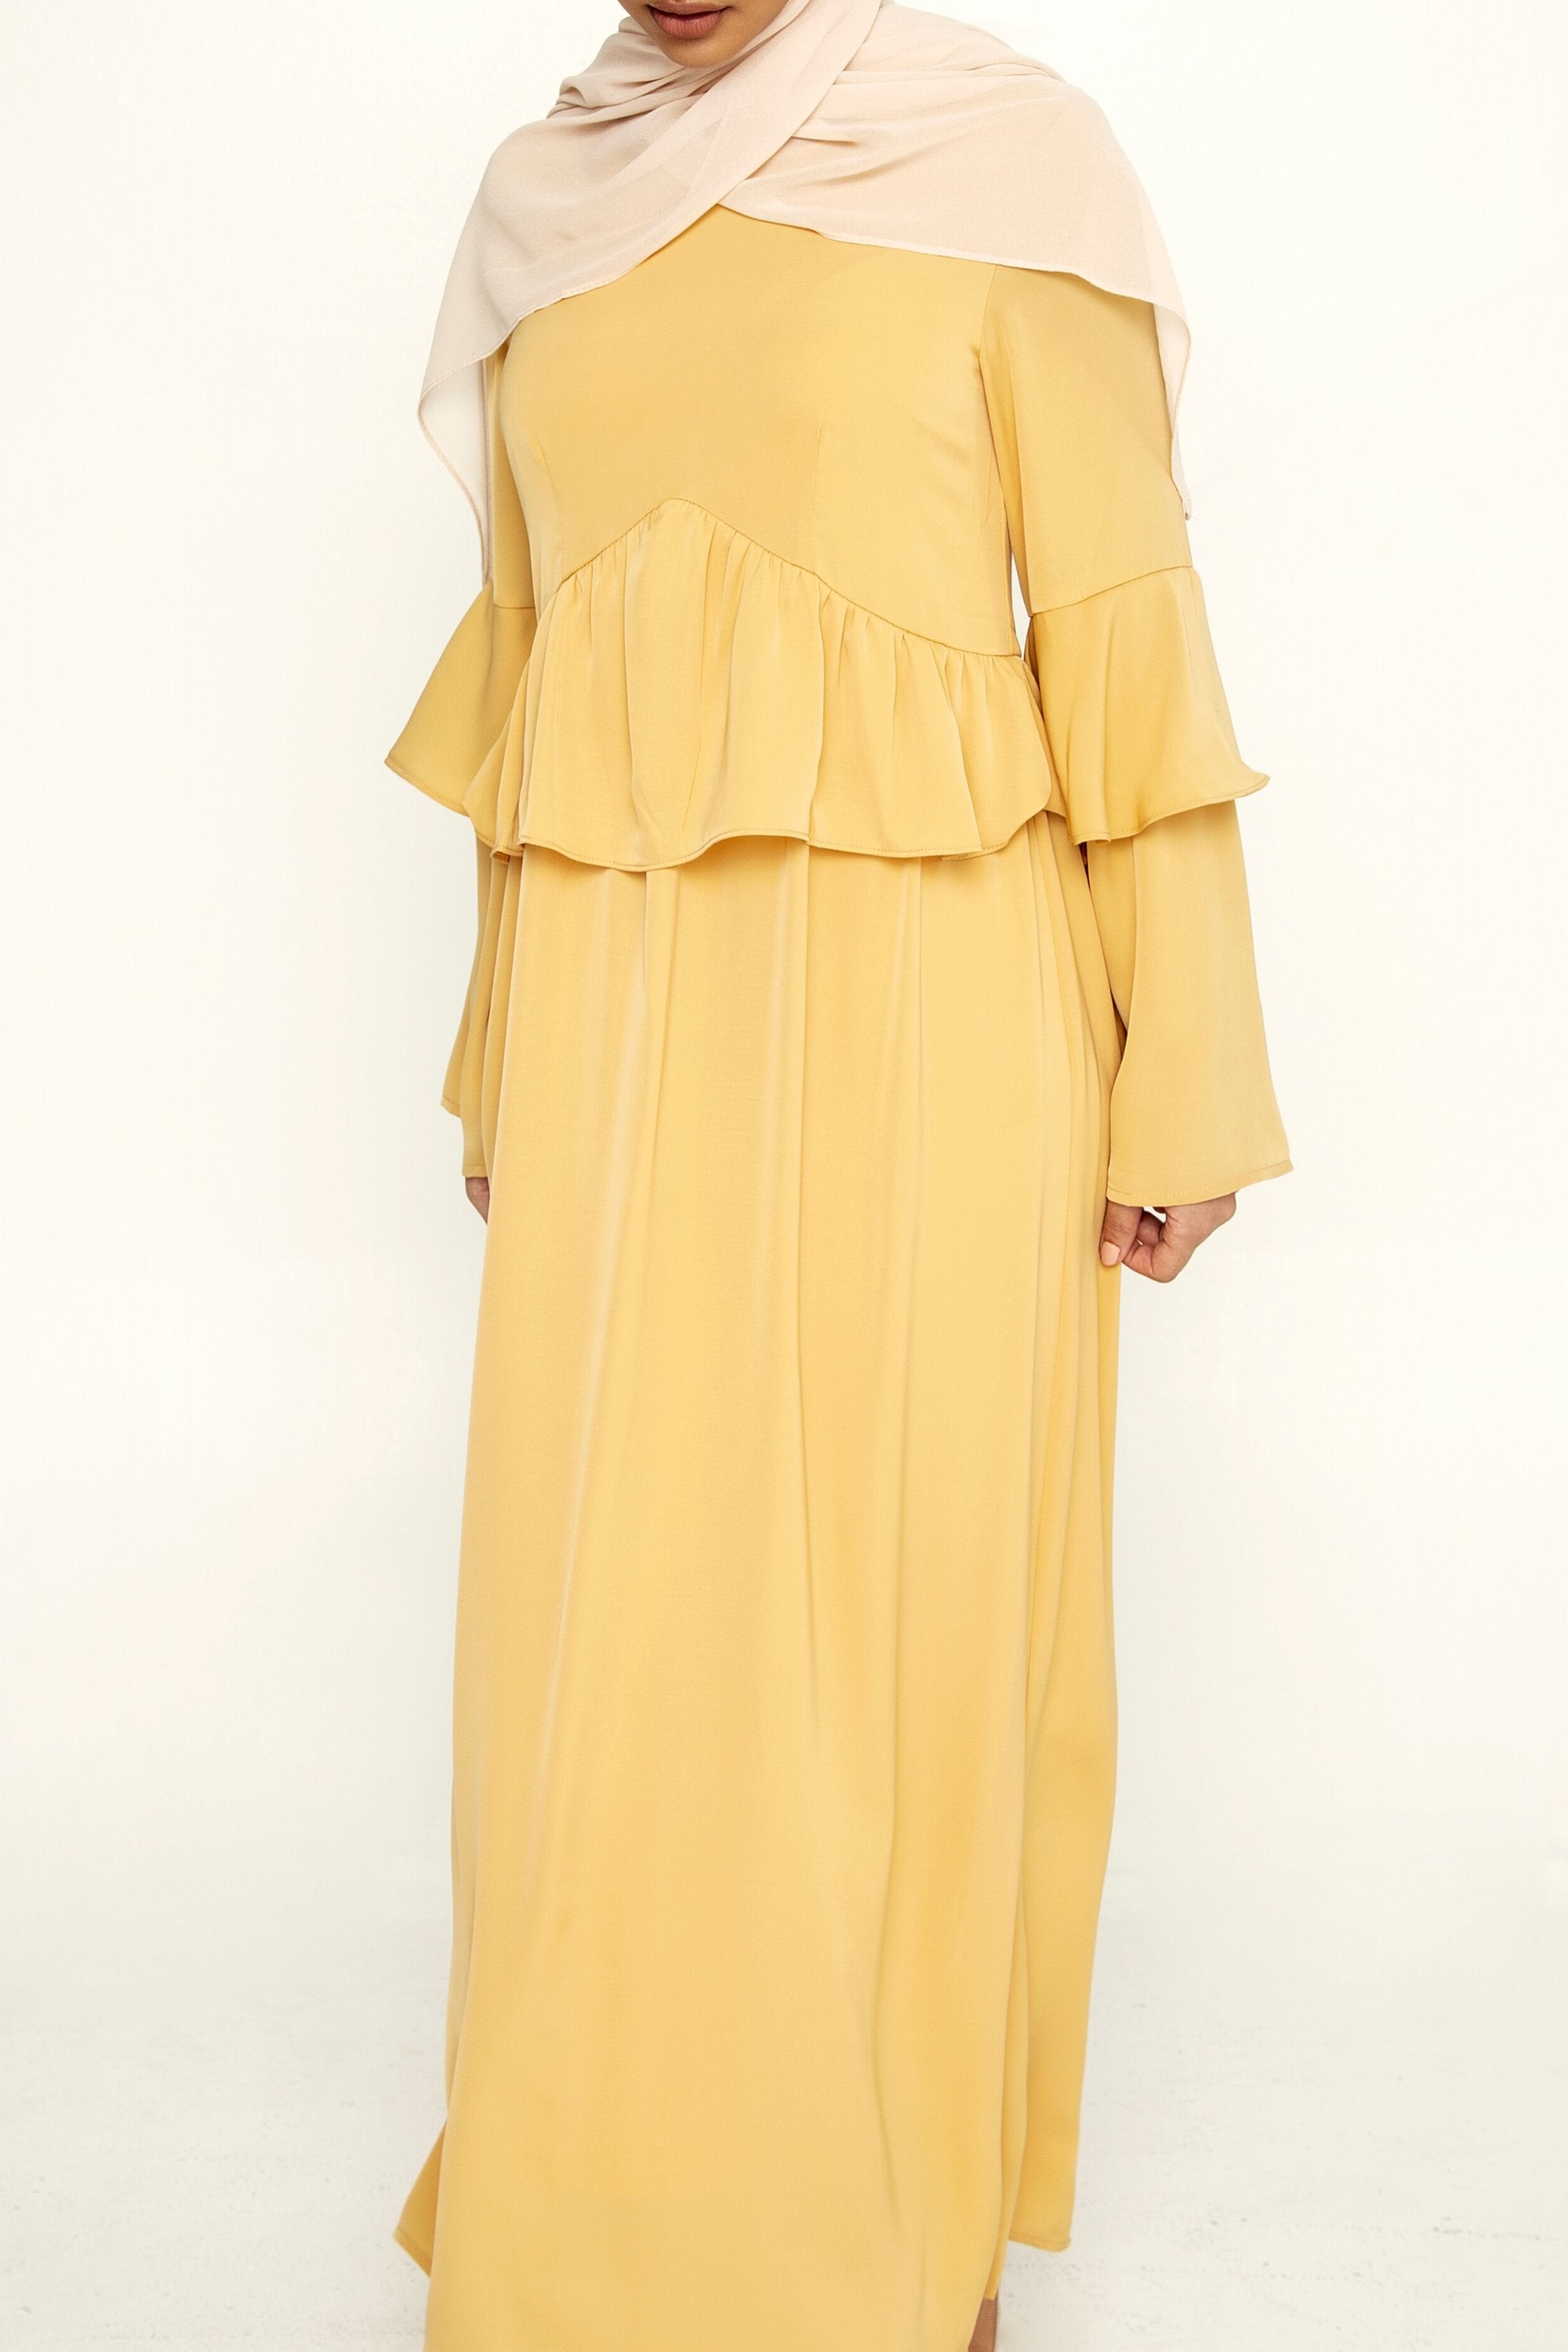 canary yellow long dress